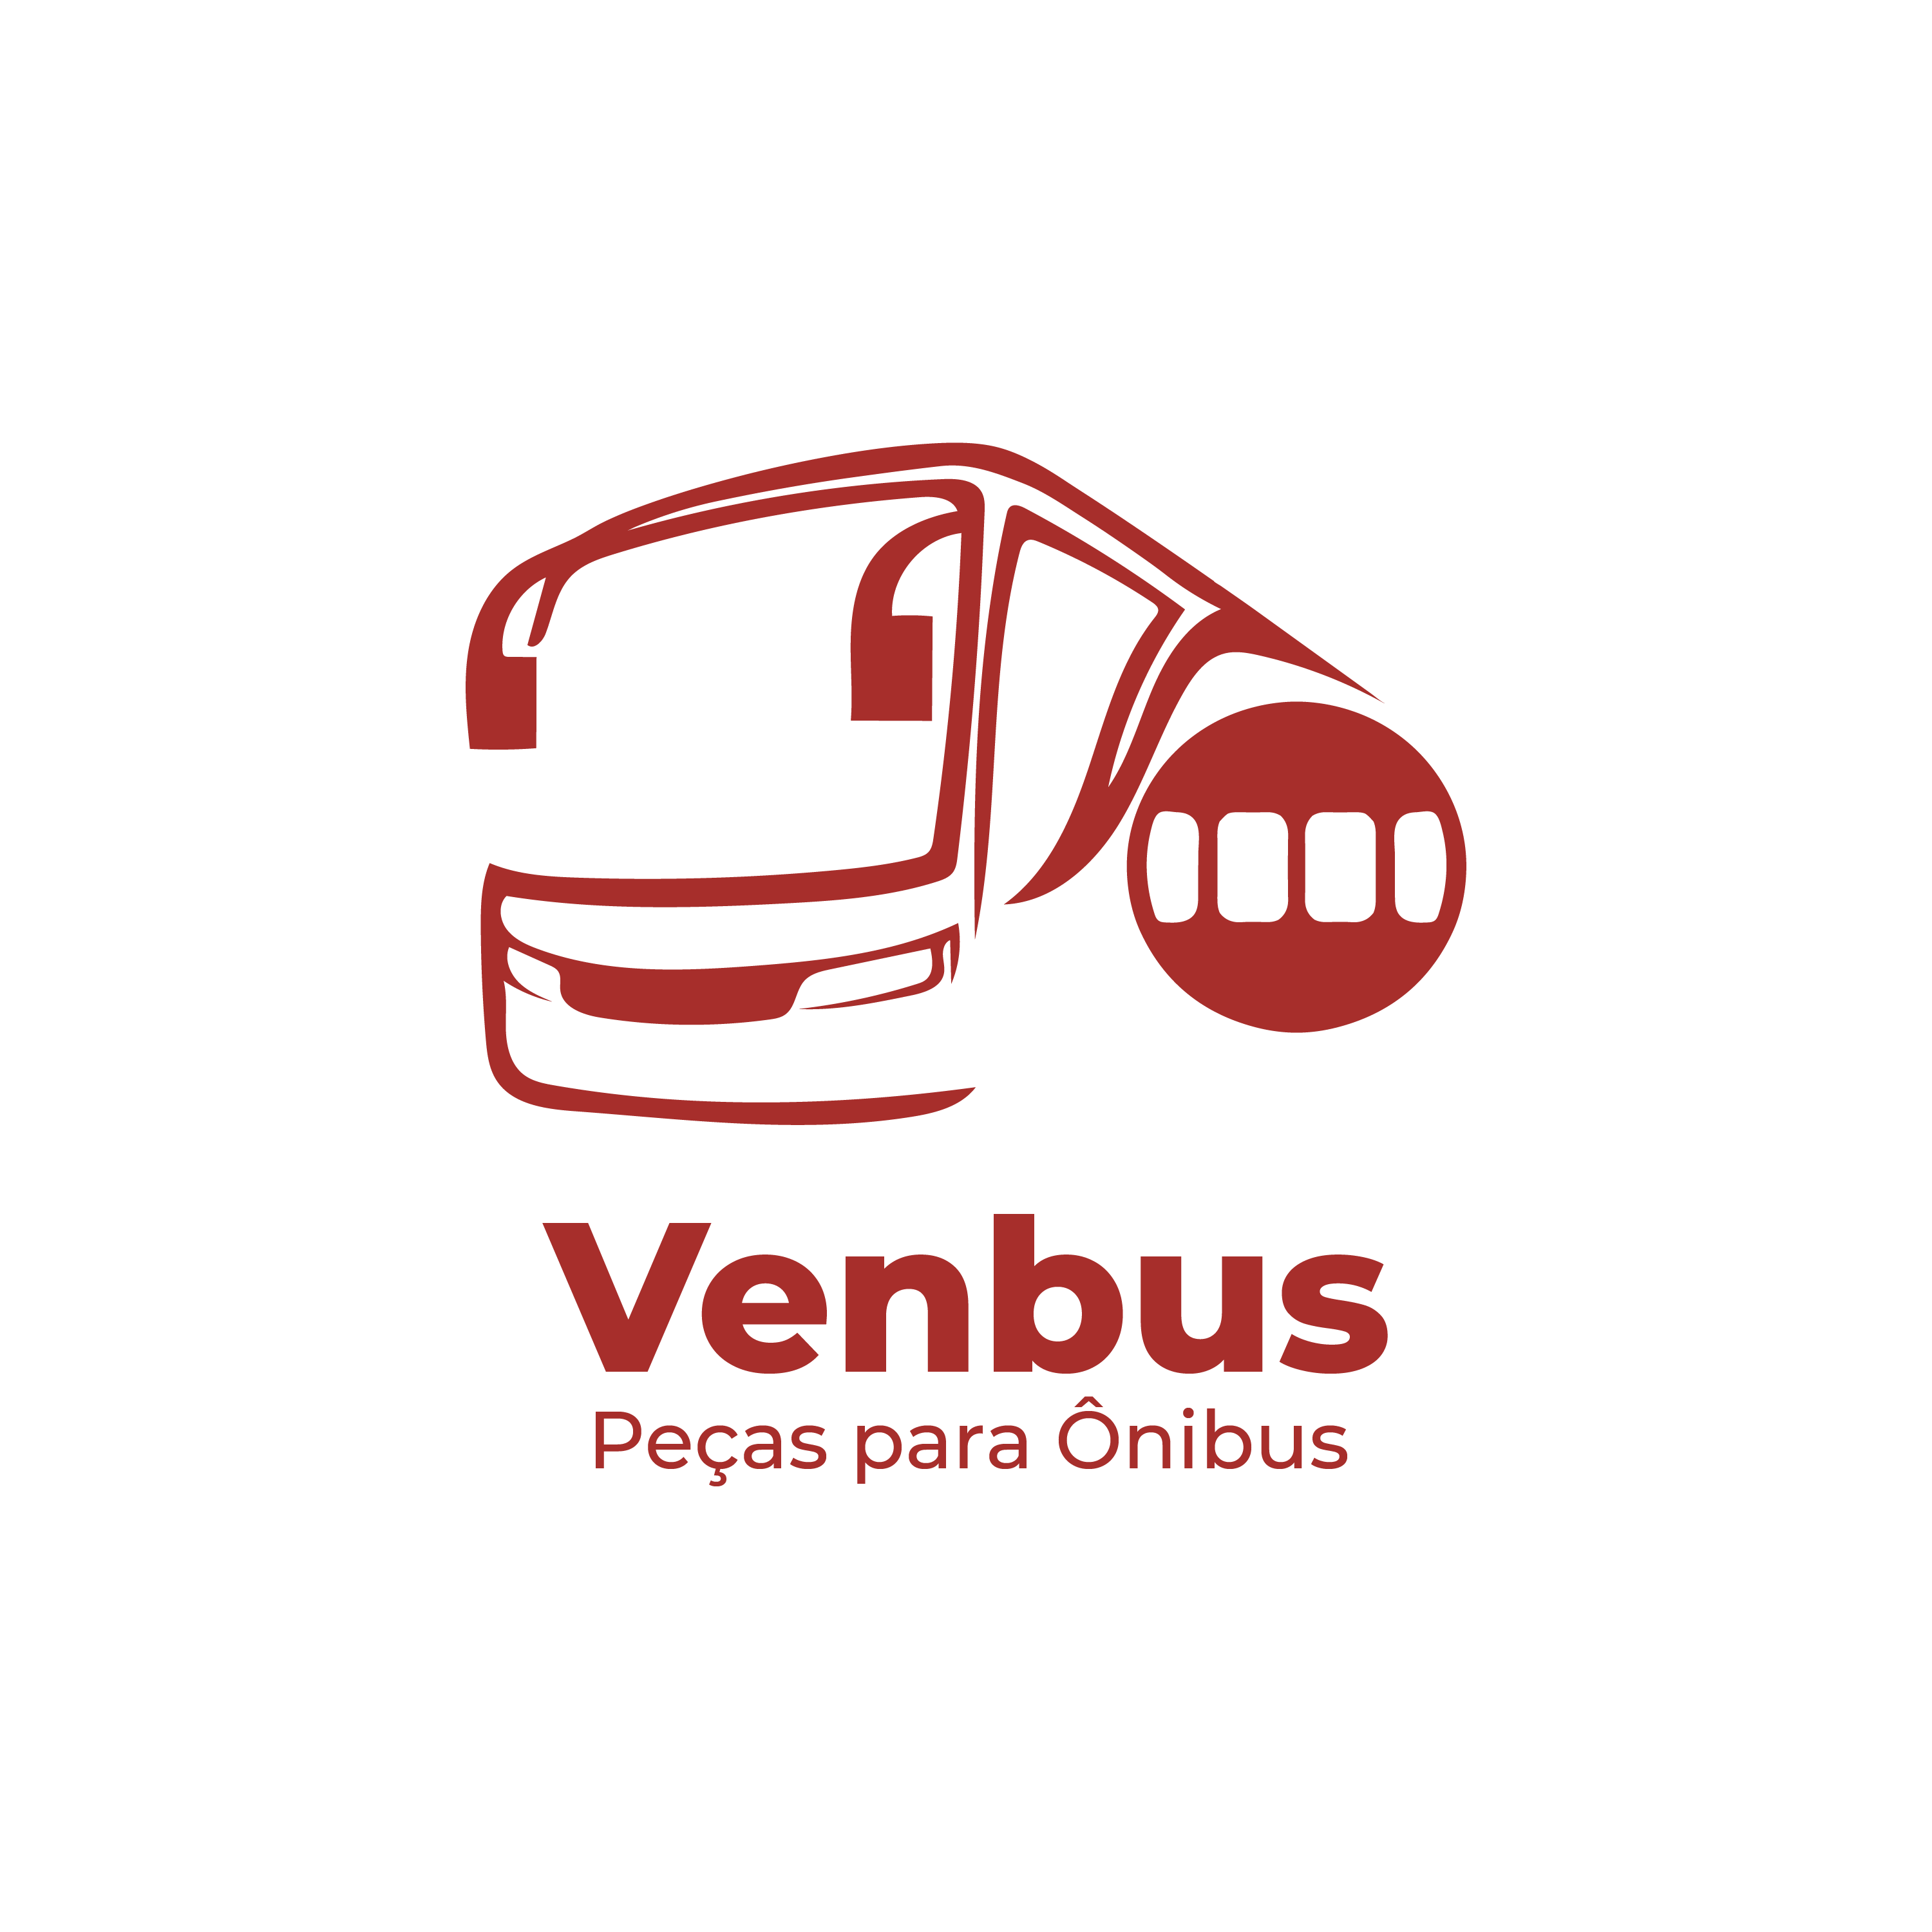 Centro - Venbus_Prancheta 1